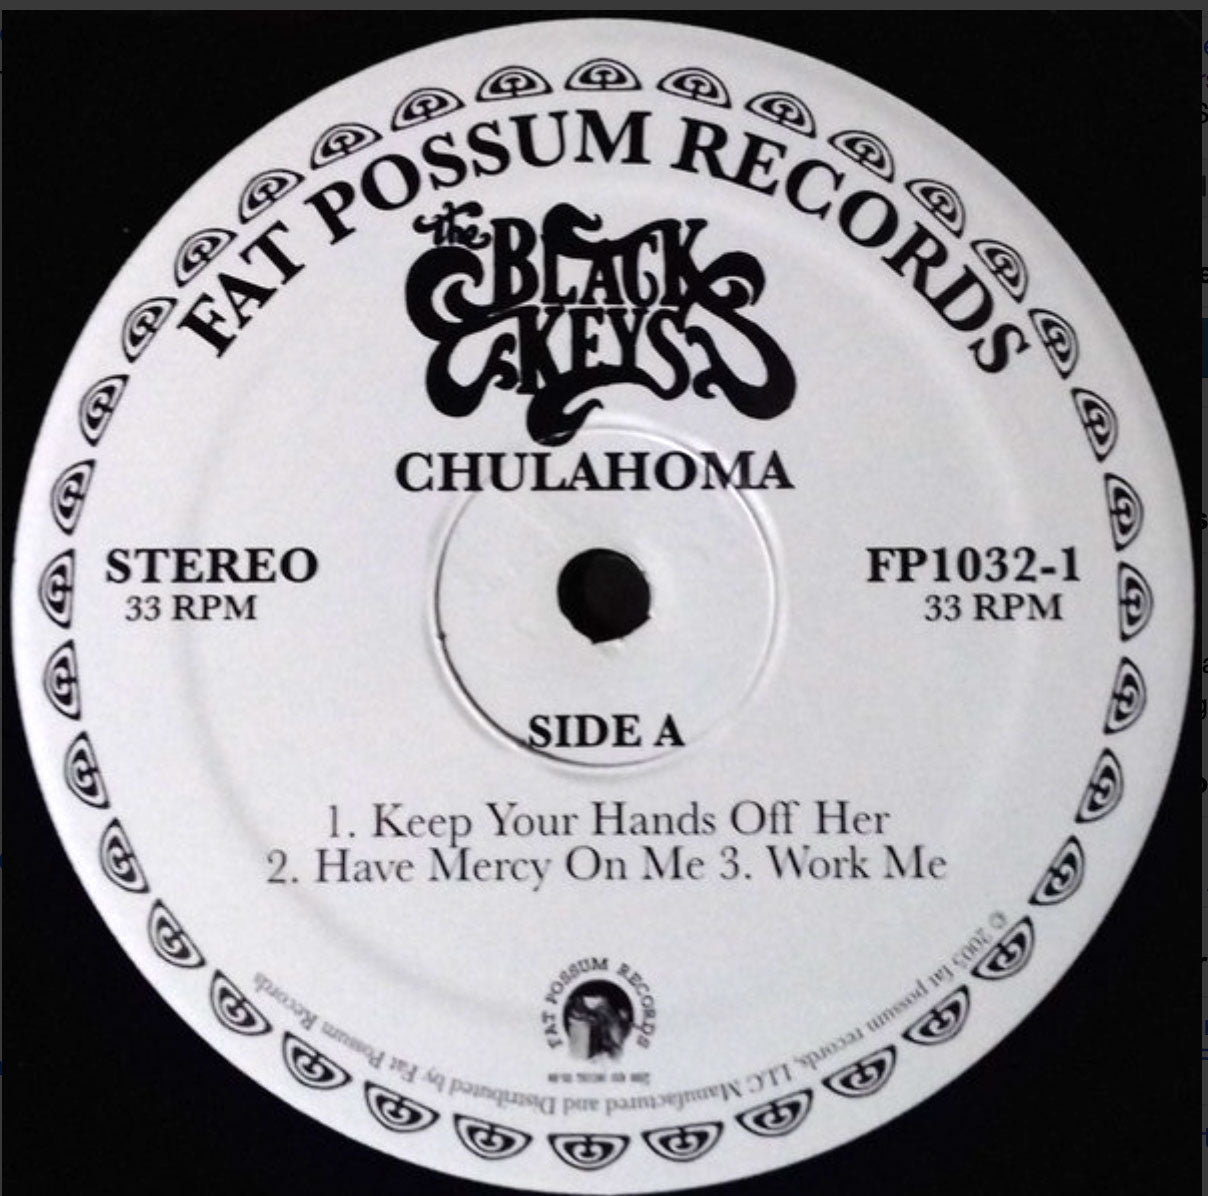 The Black Keys – Chulahoma